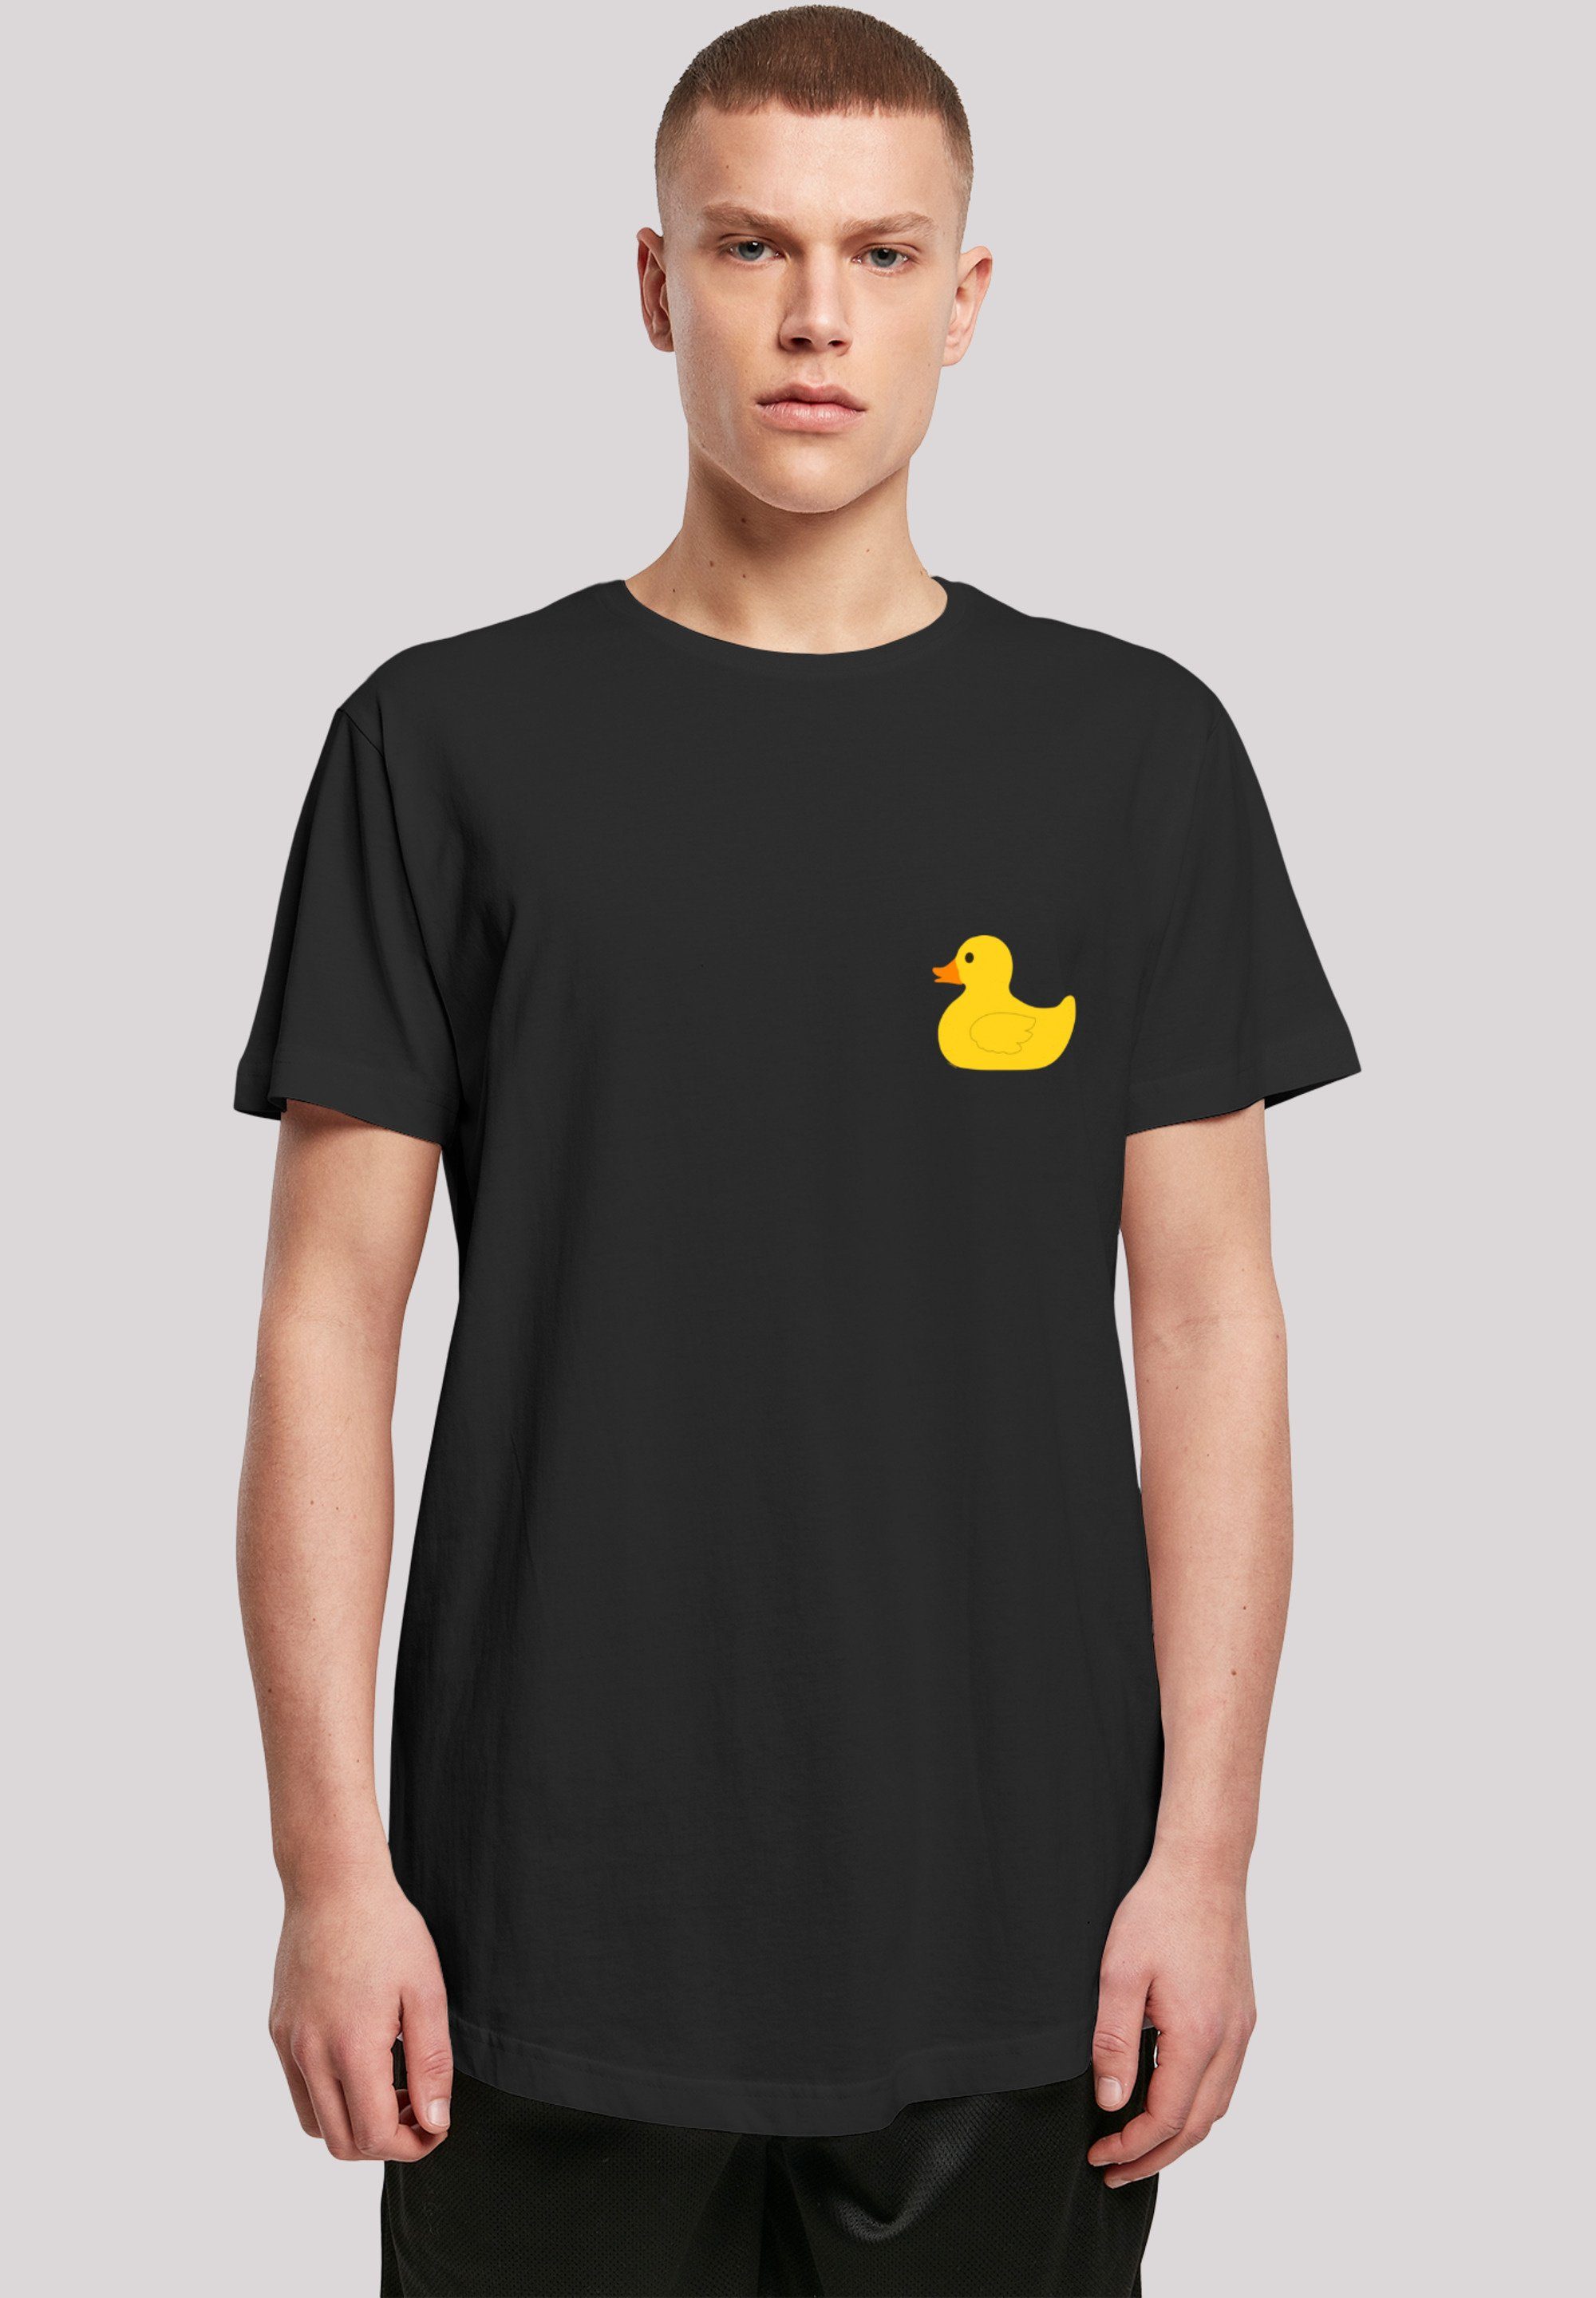 F4NT4STIC T-Shirt Yellow Rubber Duck LONG Print, Das Model ist 180 cm groß  und trägt Größe M